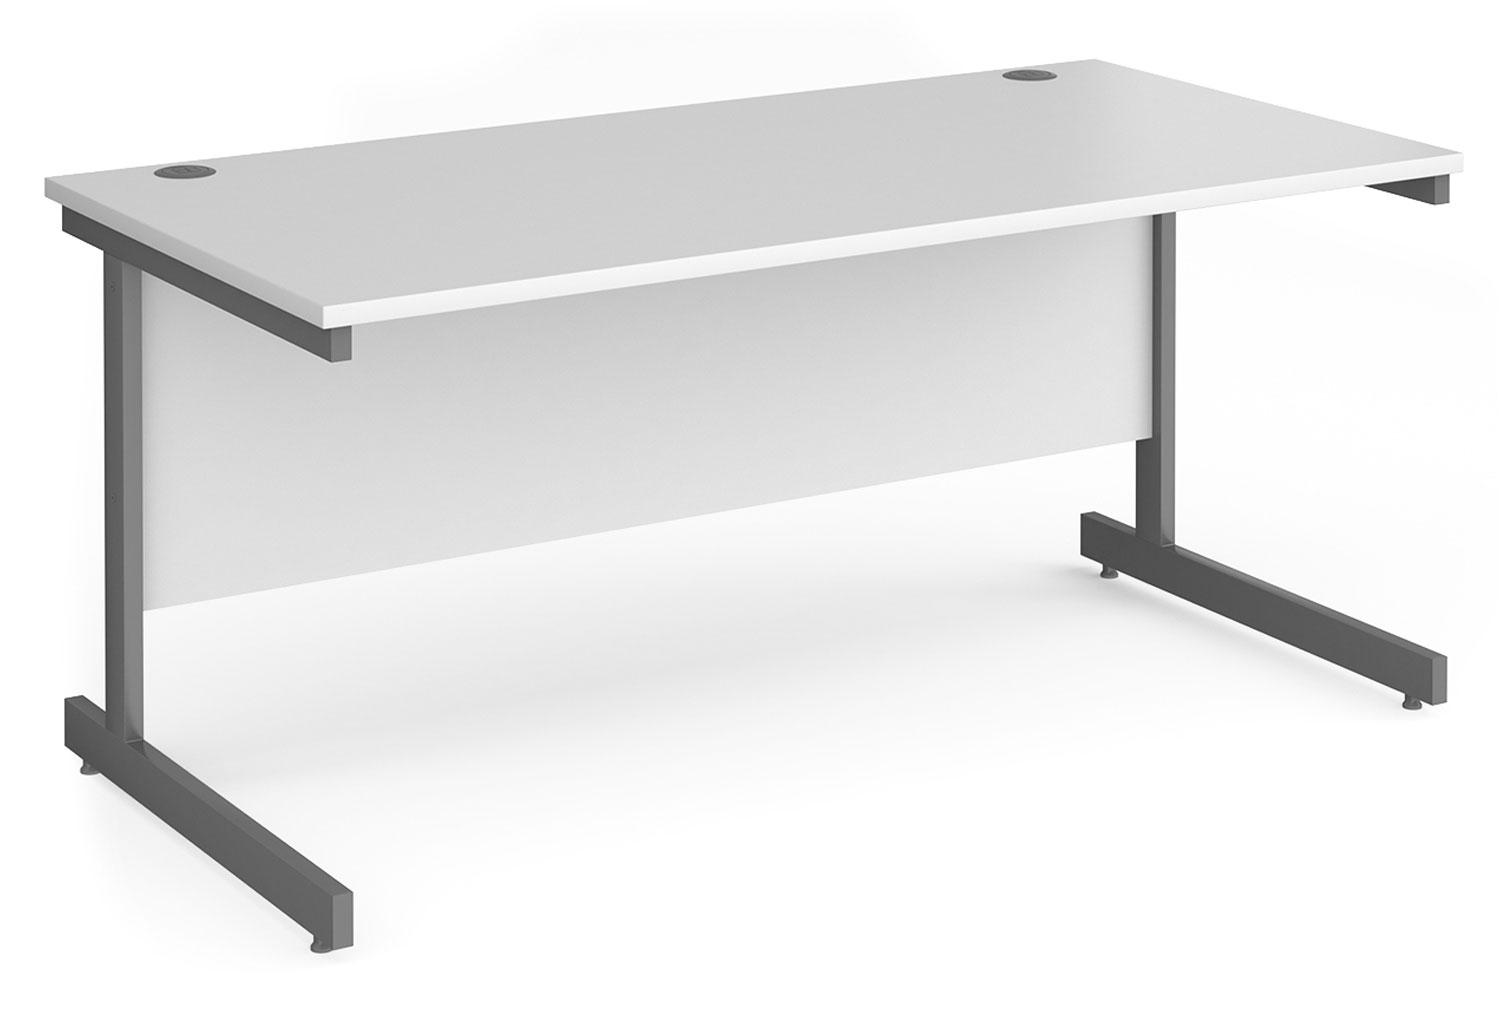 Value Line Classic+ Rectangular C-Leg Office Desk (Graphite Leg), 160wx80dx73h (cm), White, Express Delivery